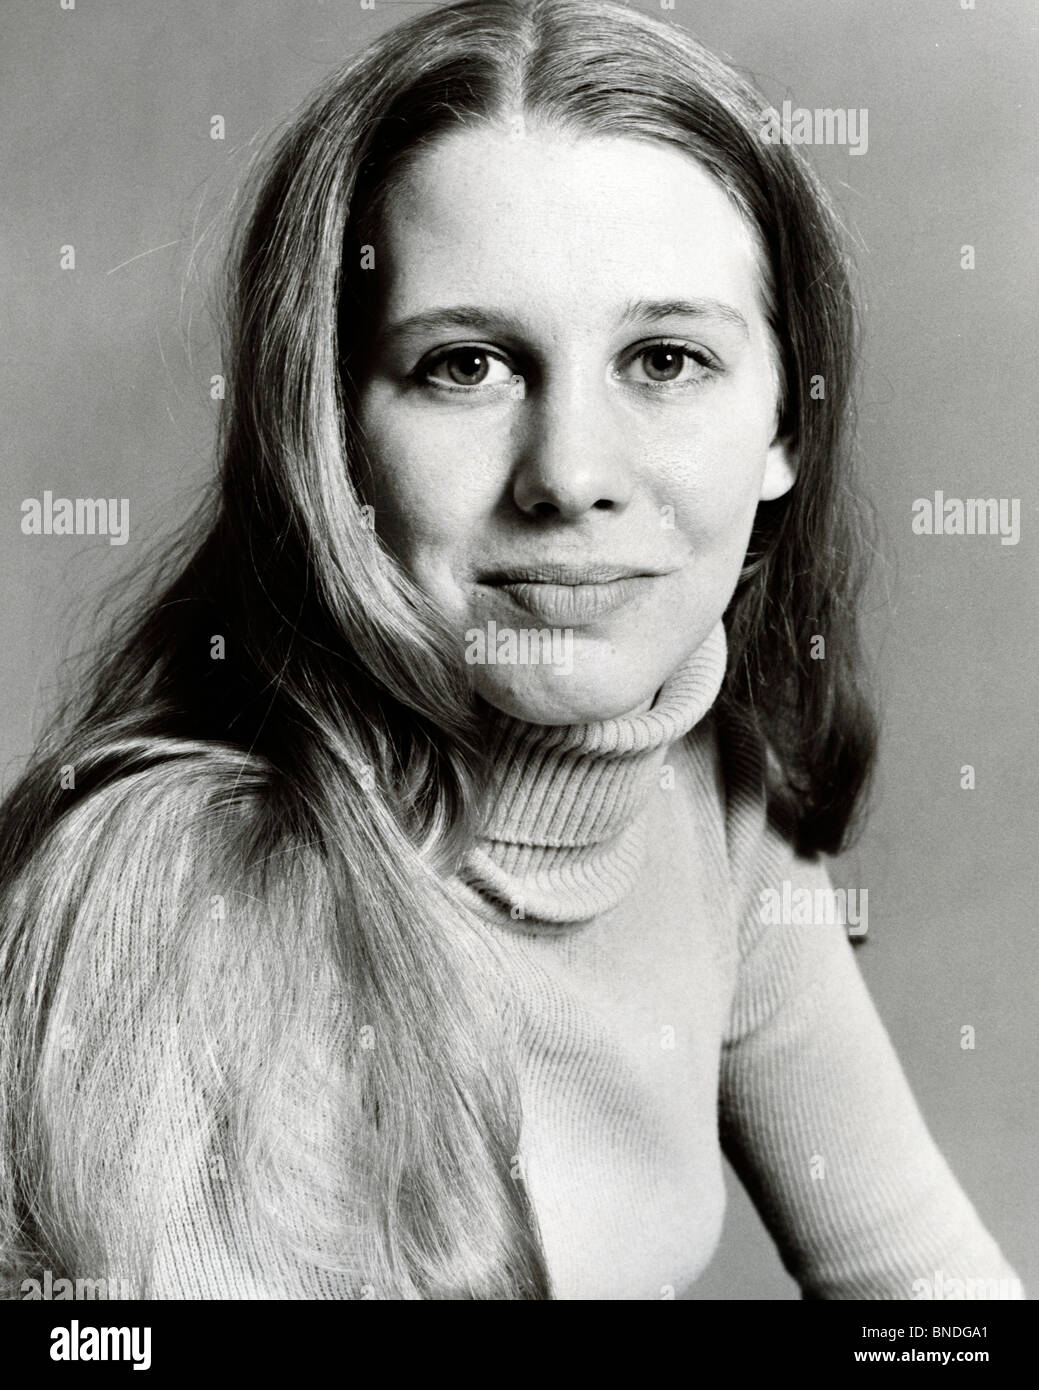 Studio portrait of young woman Stock Photo